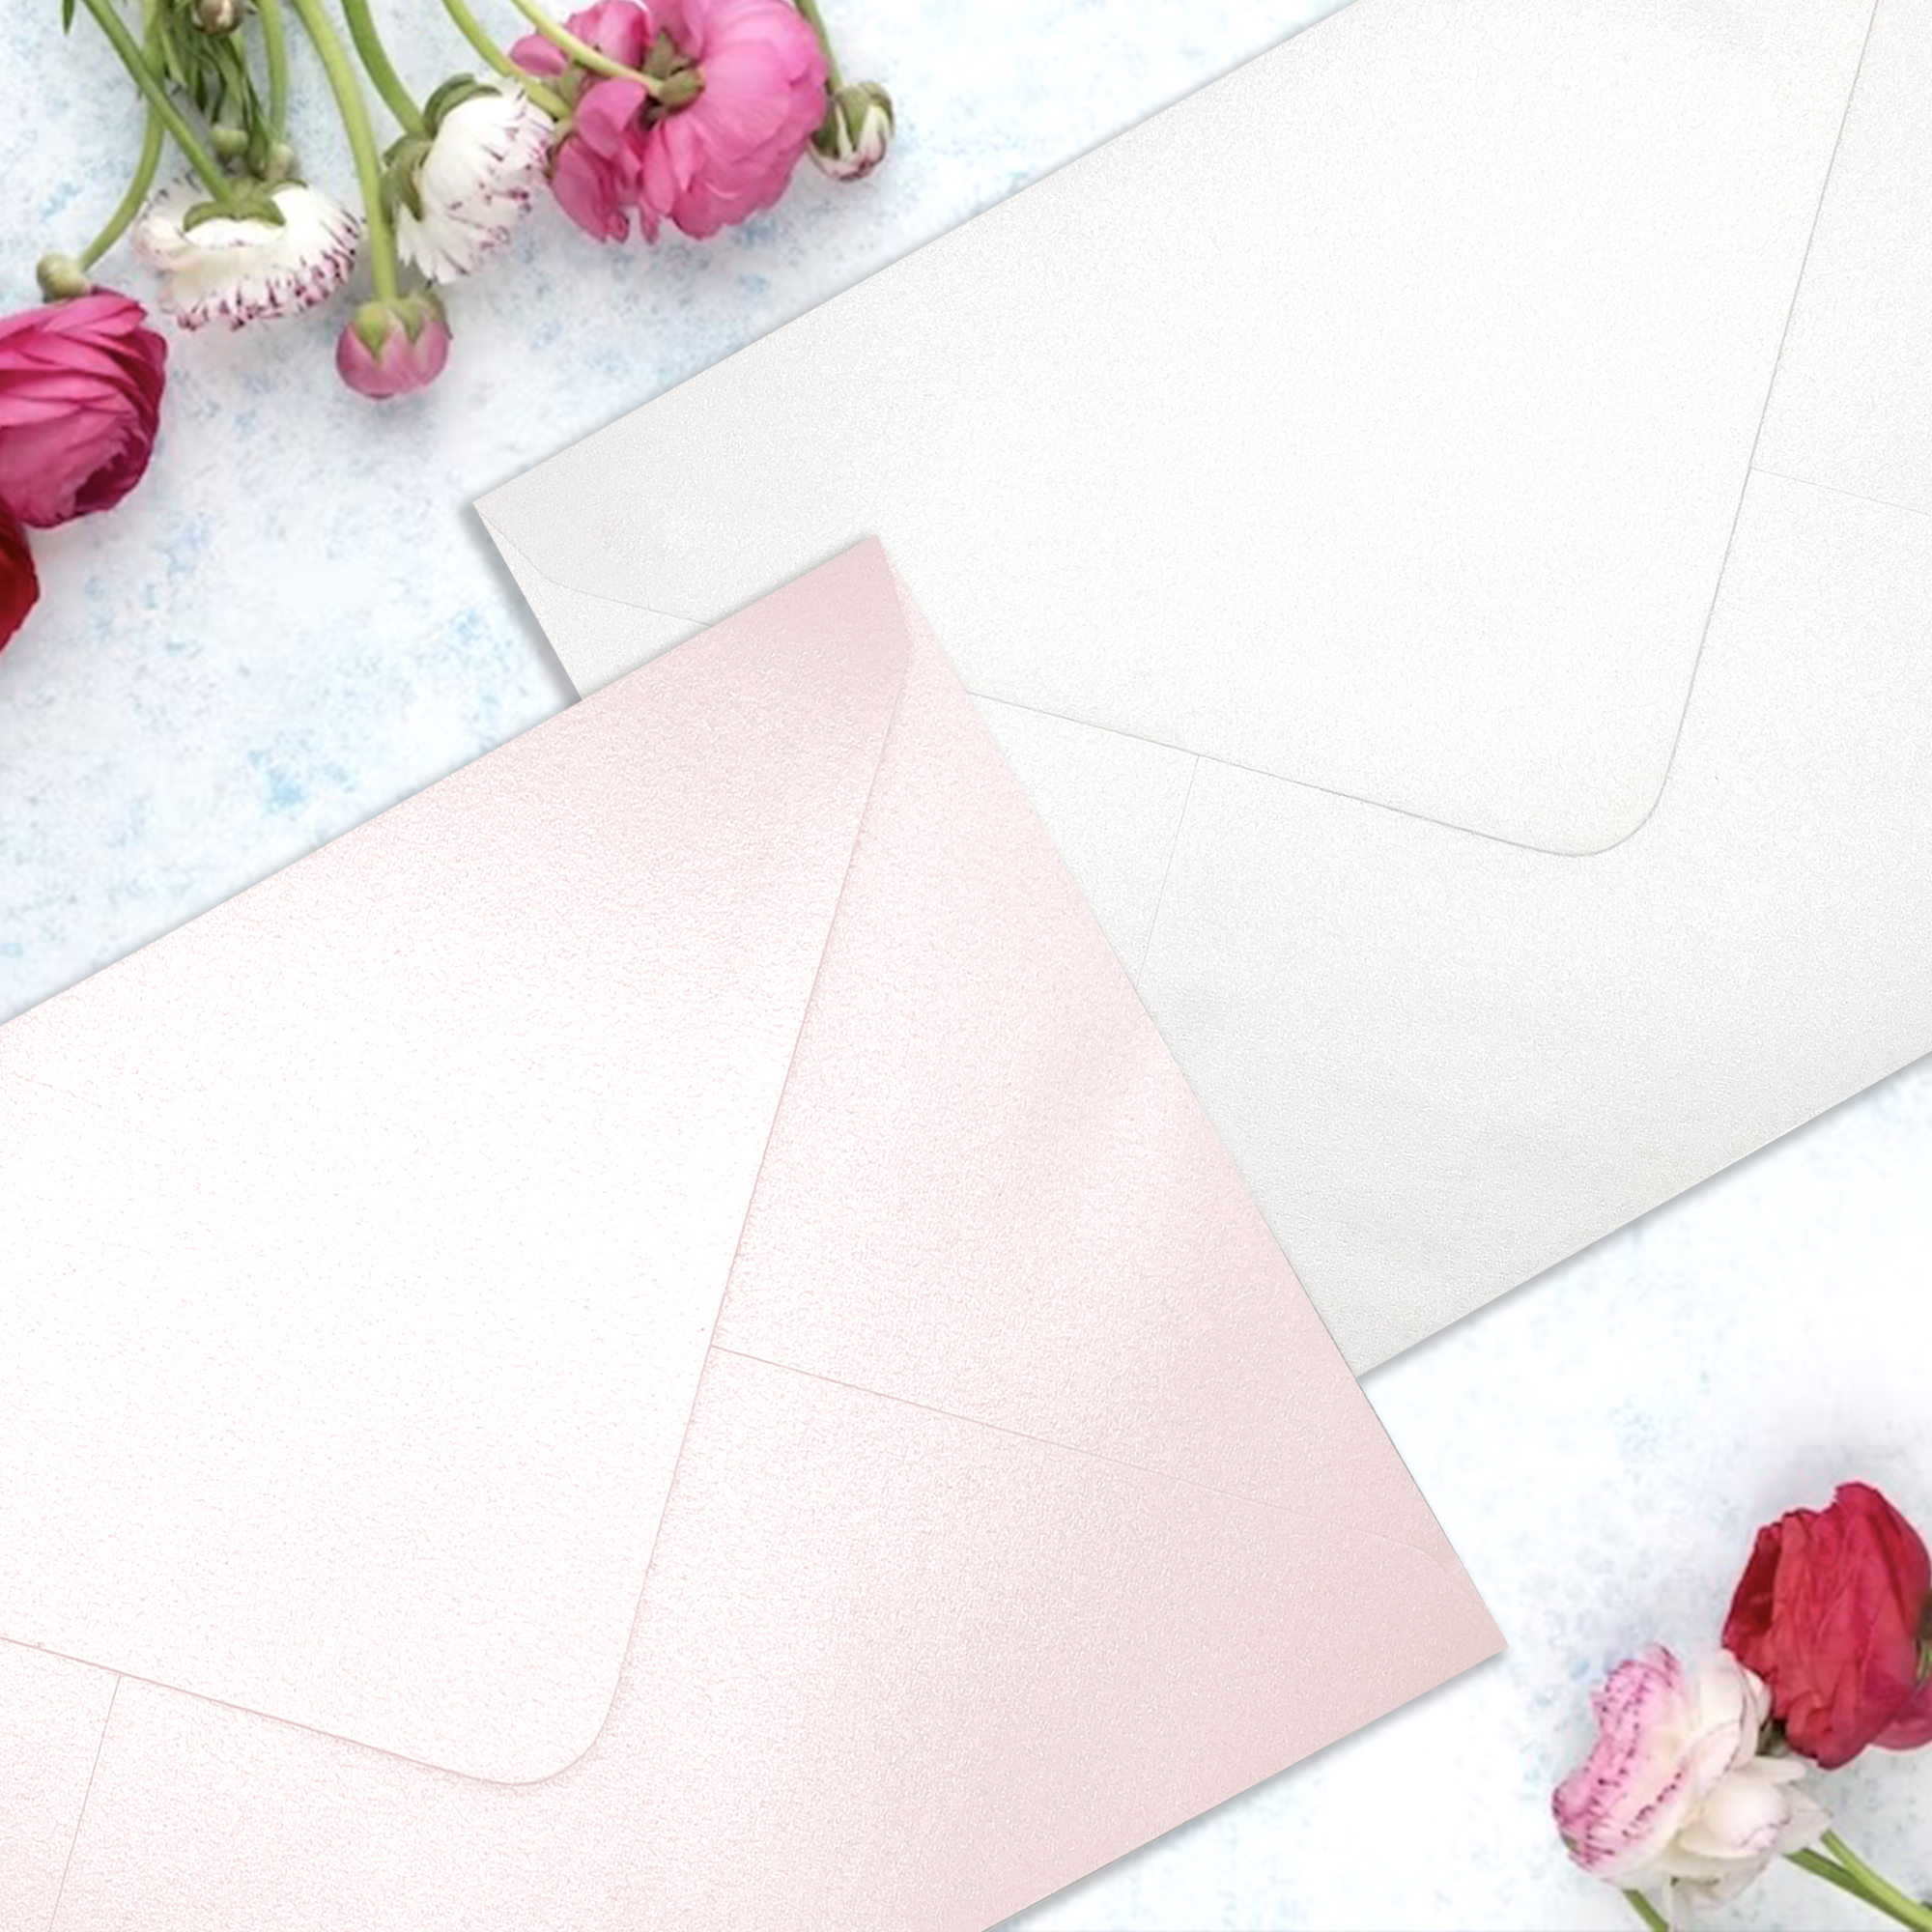 Wedding Envelopes - The Envelope People